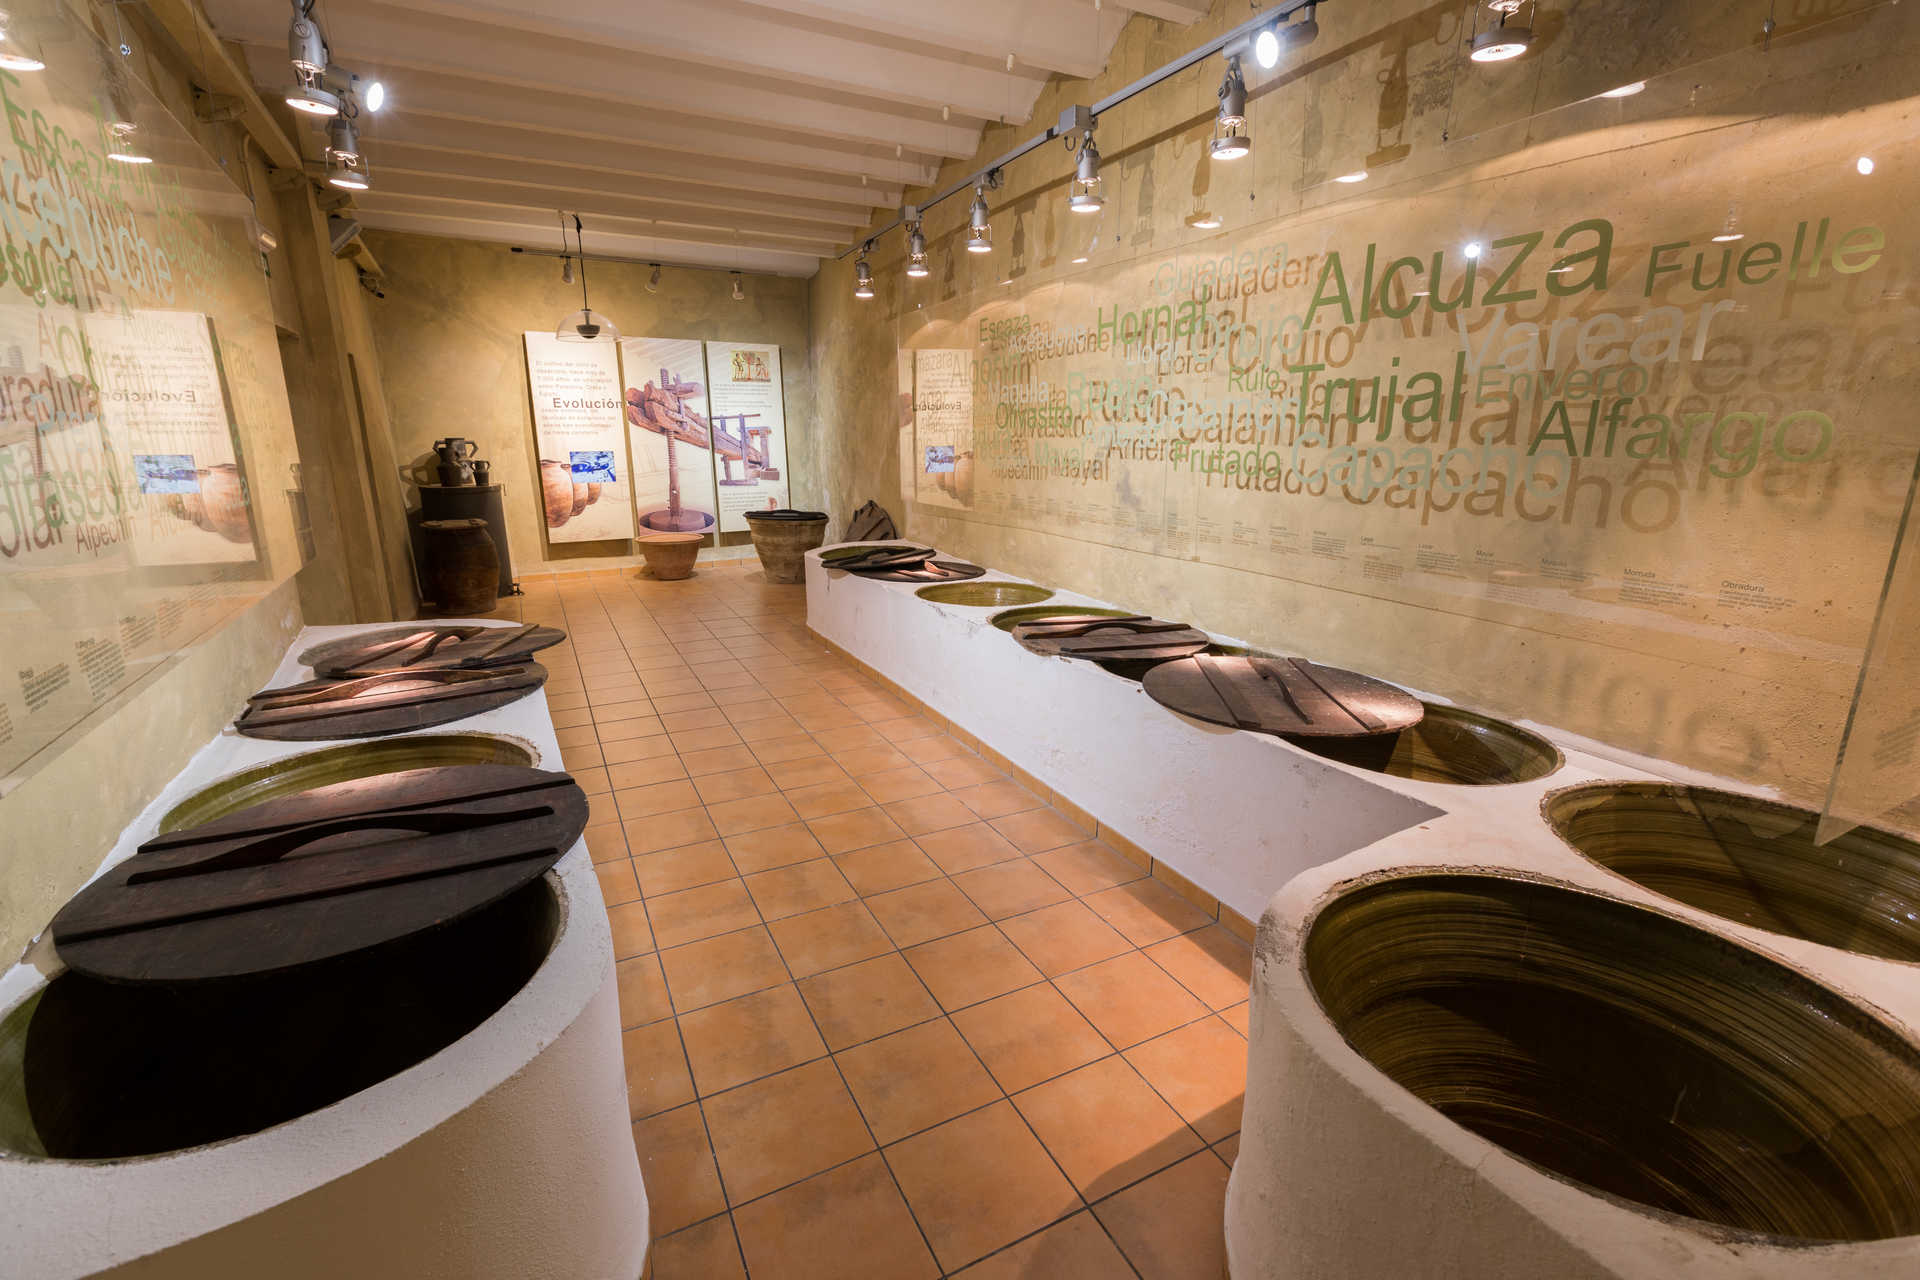 Museo del Aceite in Segorbe